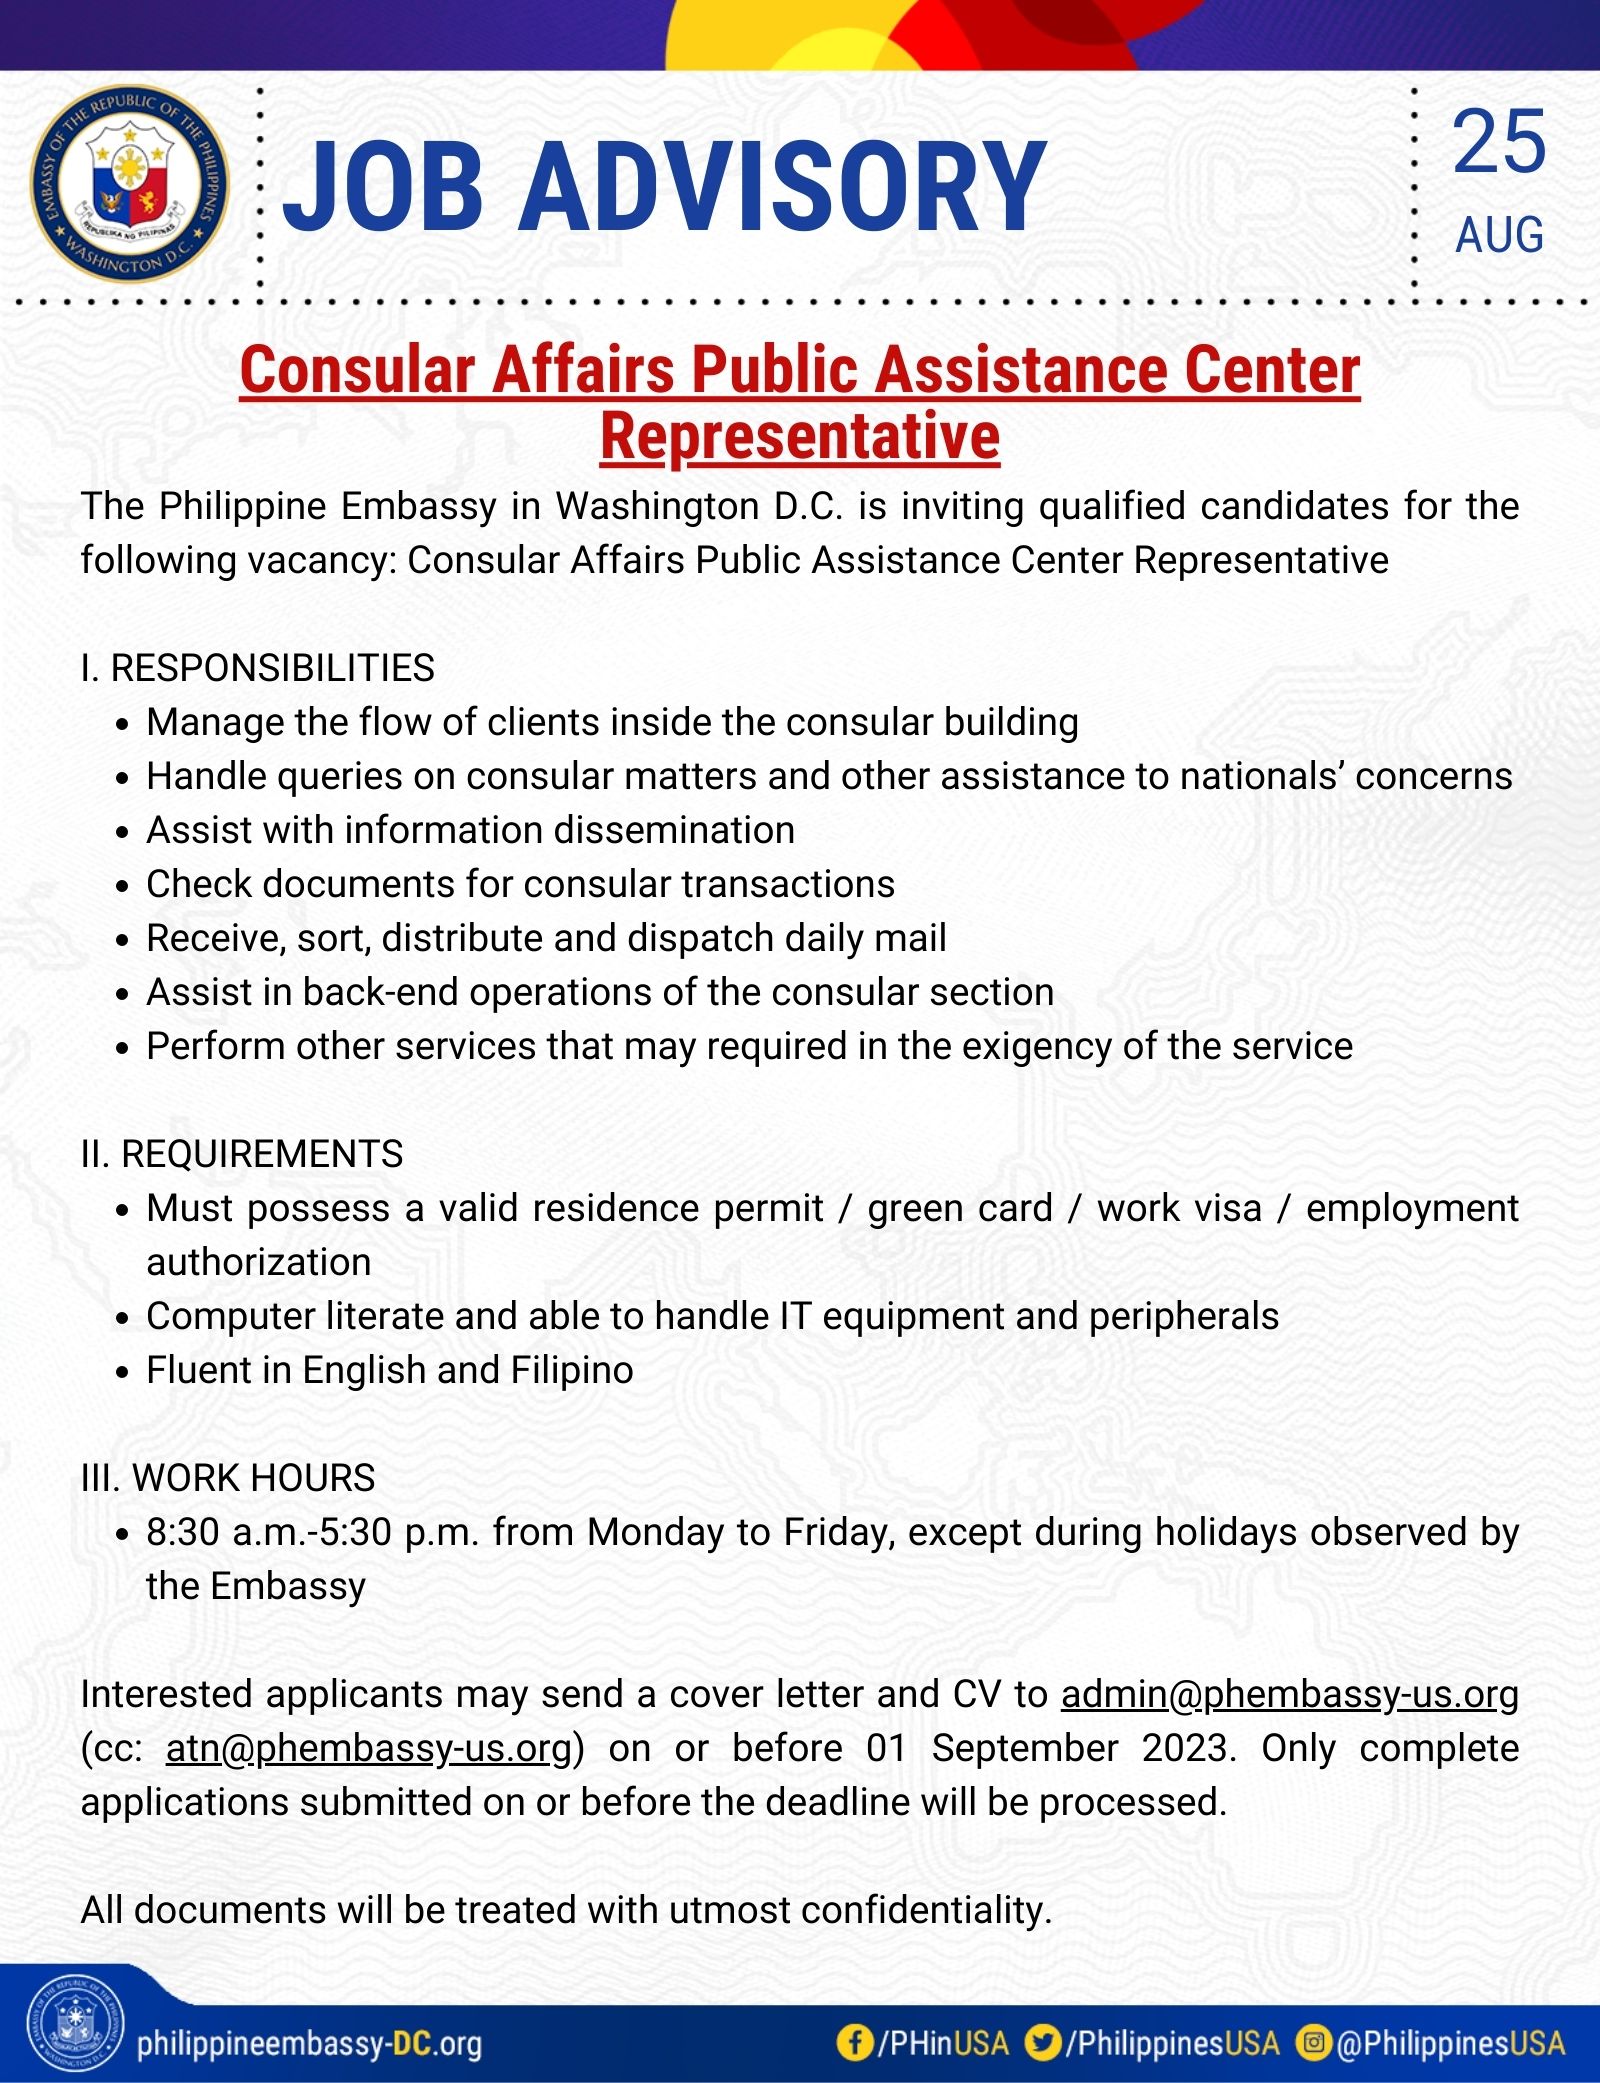 JOB VACANCY: Consular Affairs Public Assistance Center Representative